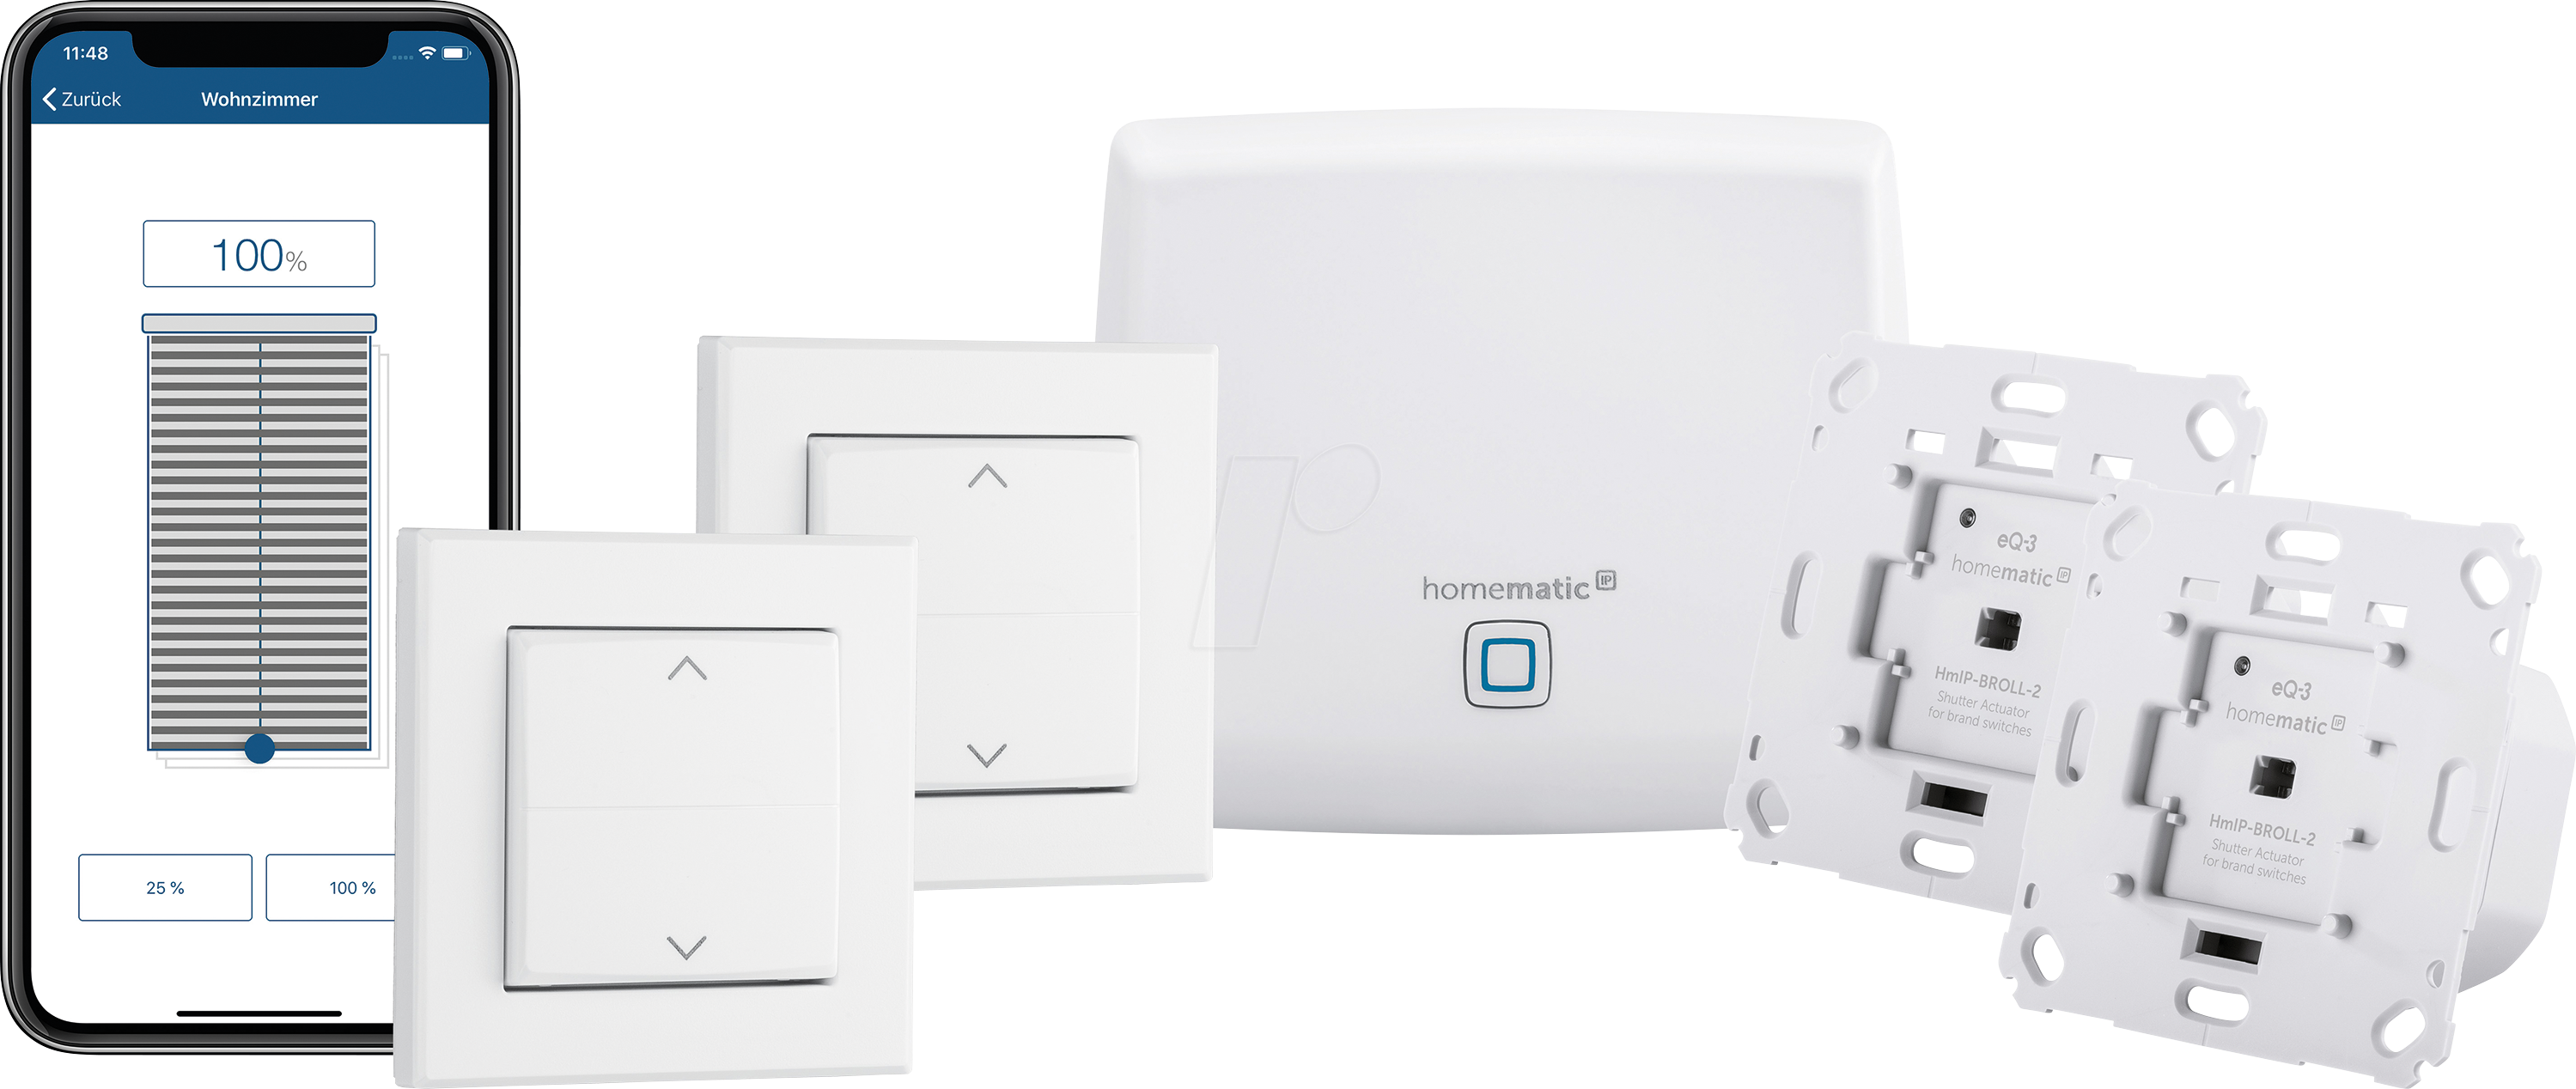 Homematic IP Smart Home Starter Set Beschattung, Digitale Steuerung für 2 Rollläden per App, Alexa & Google Assistant, elektrische Rolladen smart nachrüsten, 158143A0